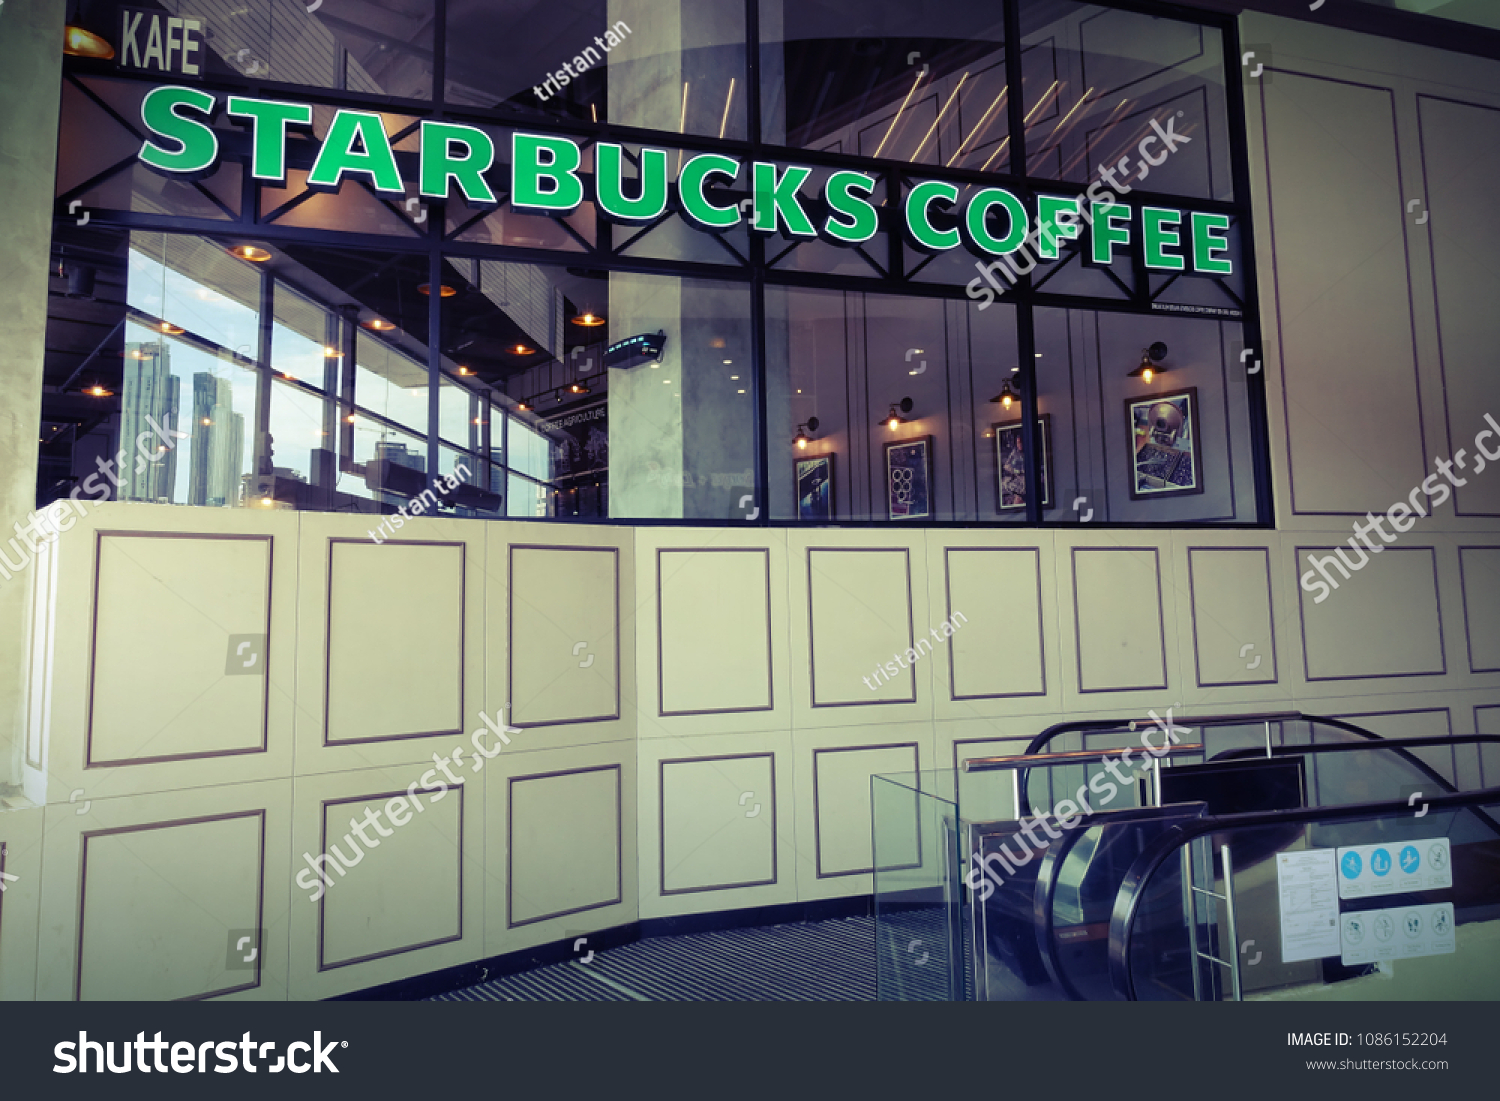 Starbucks johor bahru